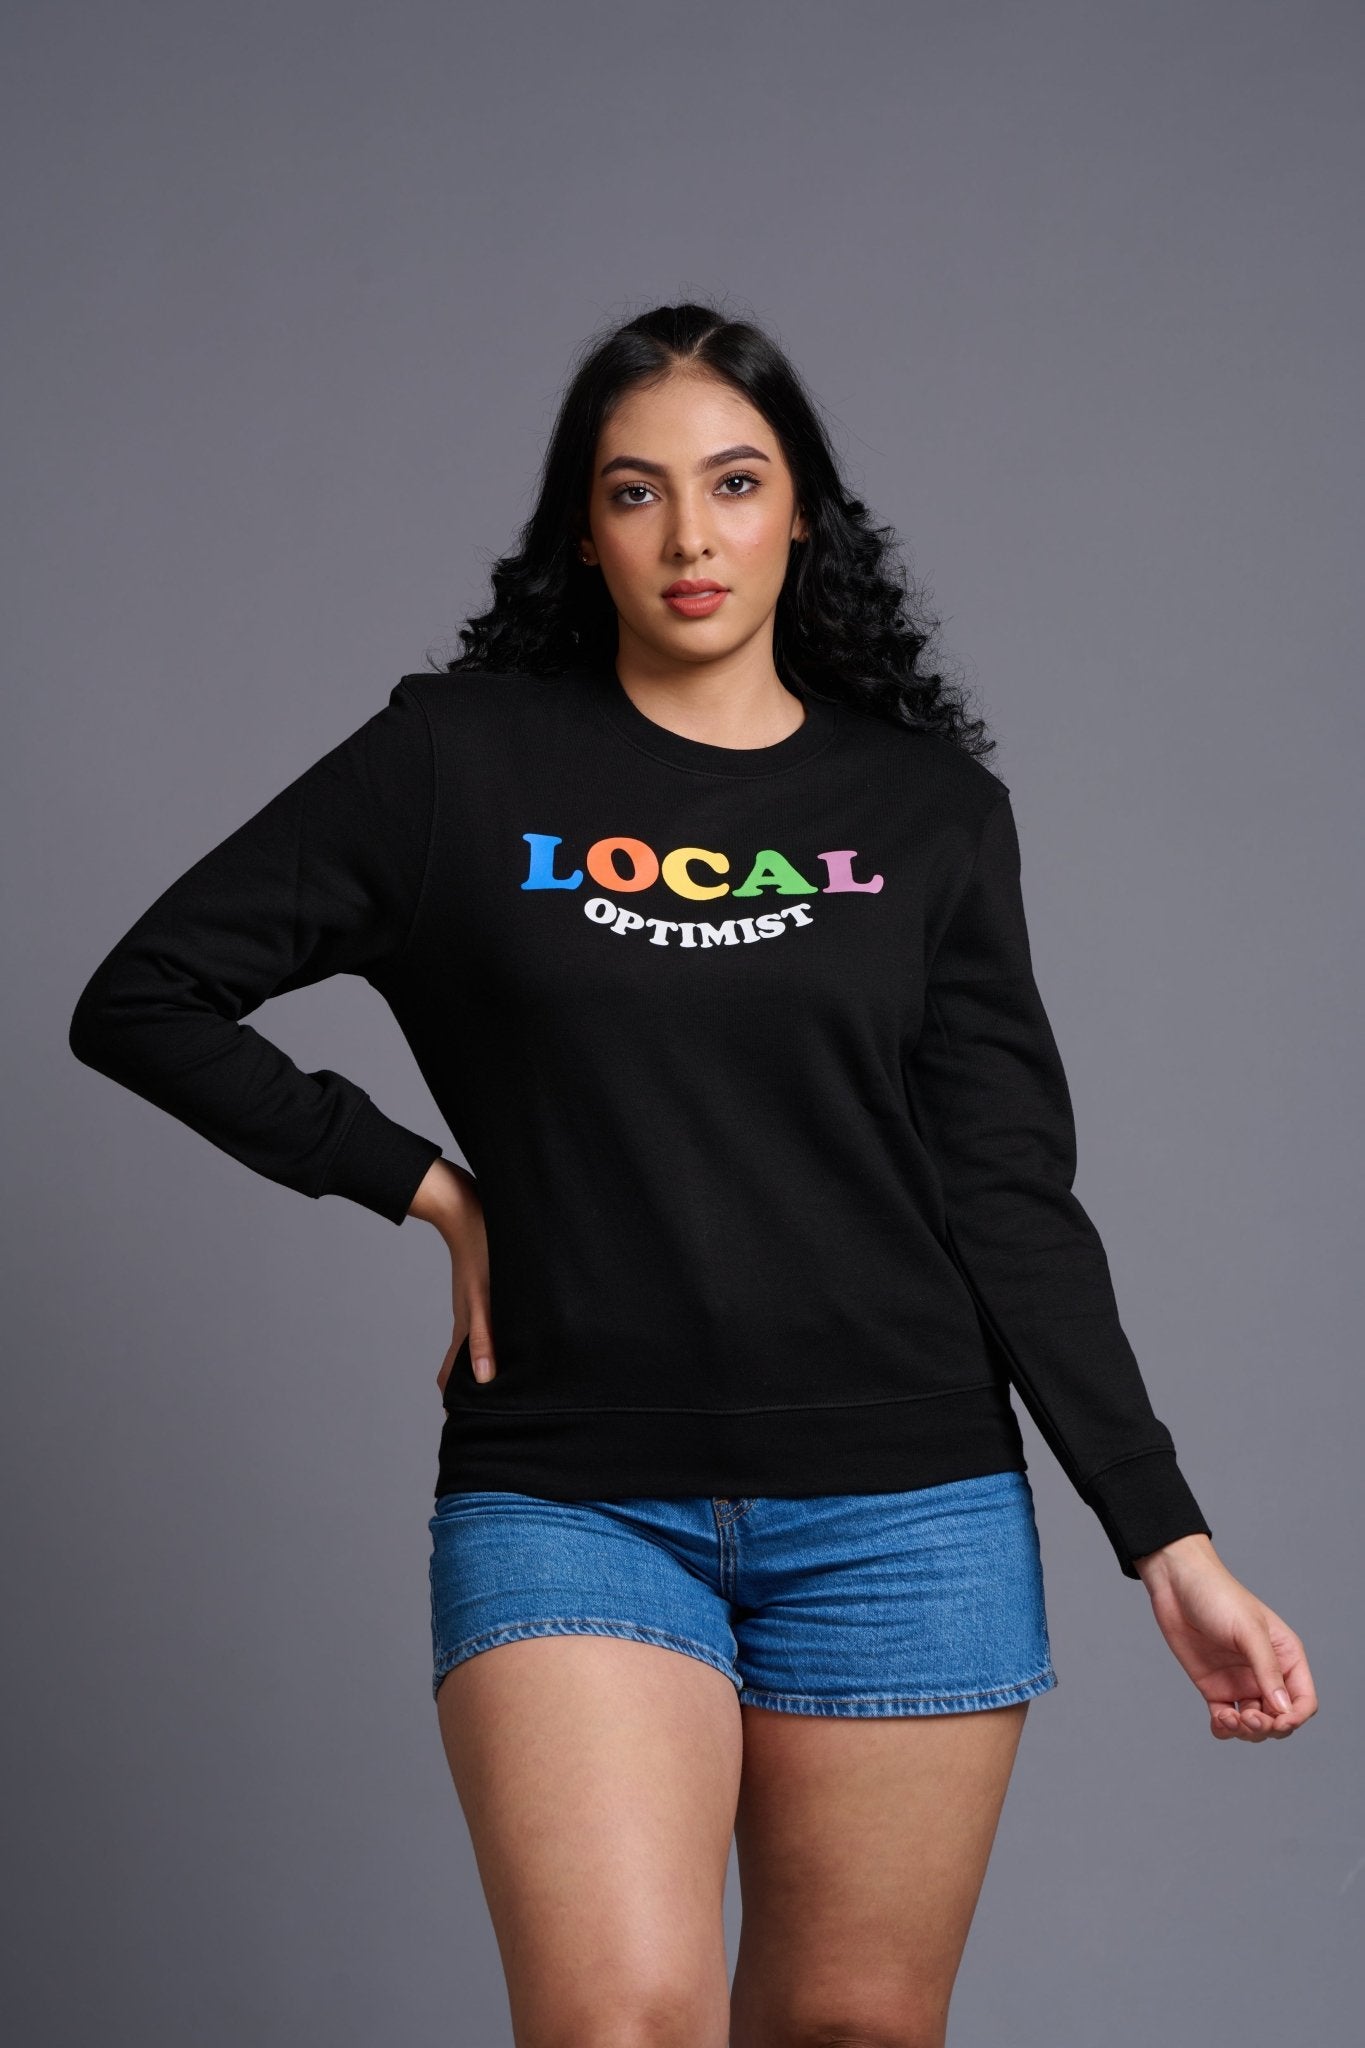 Local Optimistic Printed Black Sweatshirt for Women - Go Devil